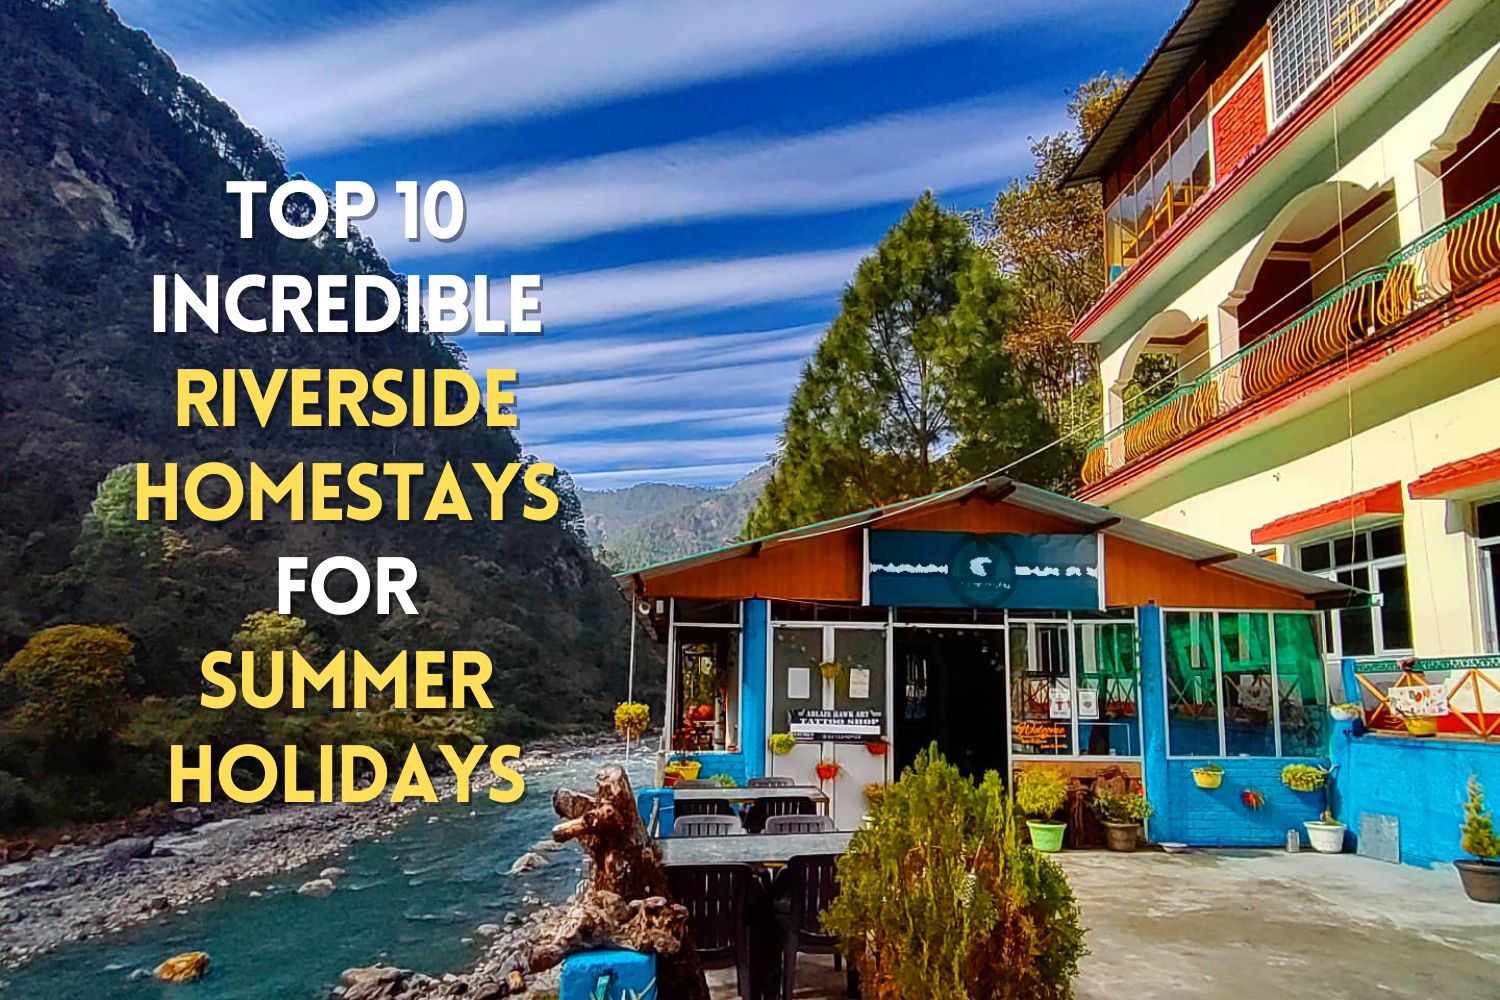 10 Incredible Riverside Homestays for Summer Holidays